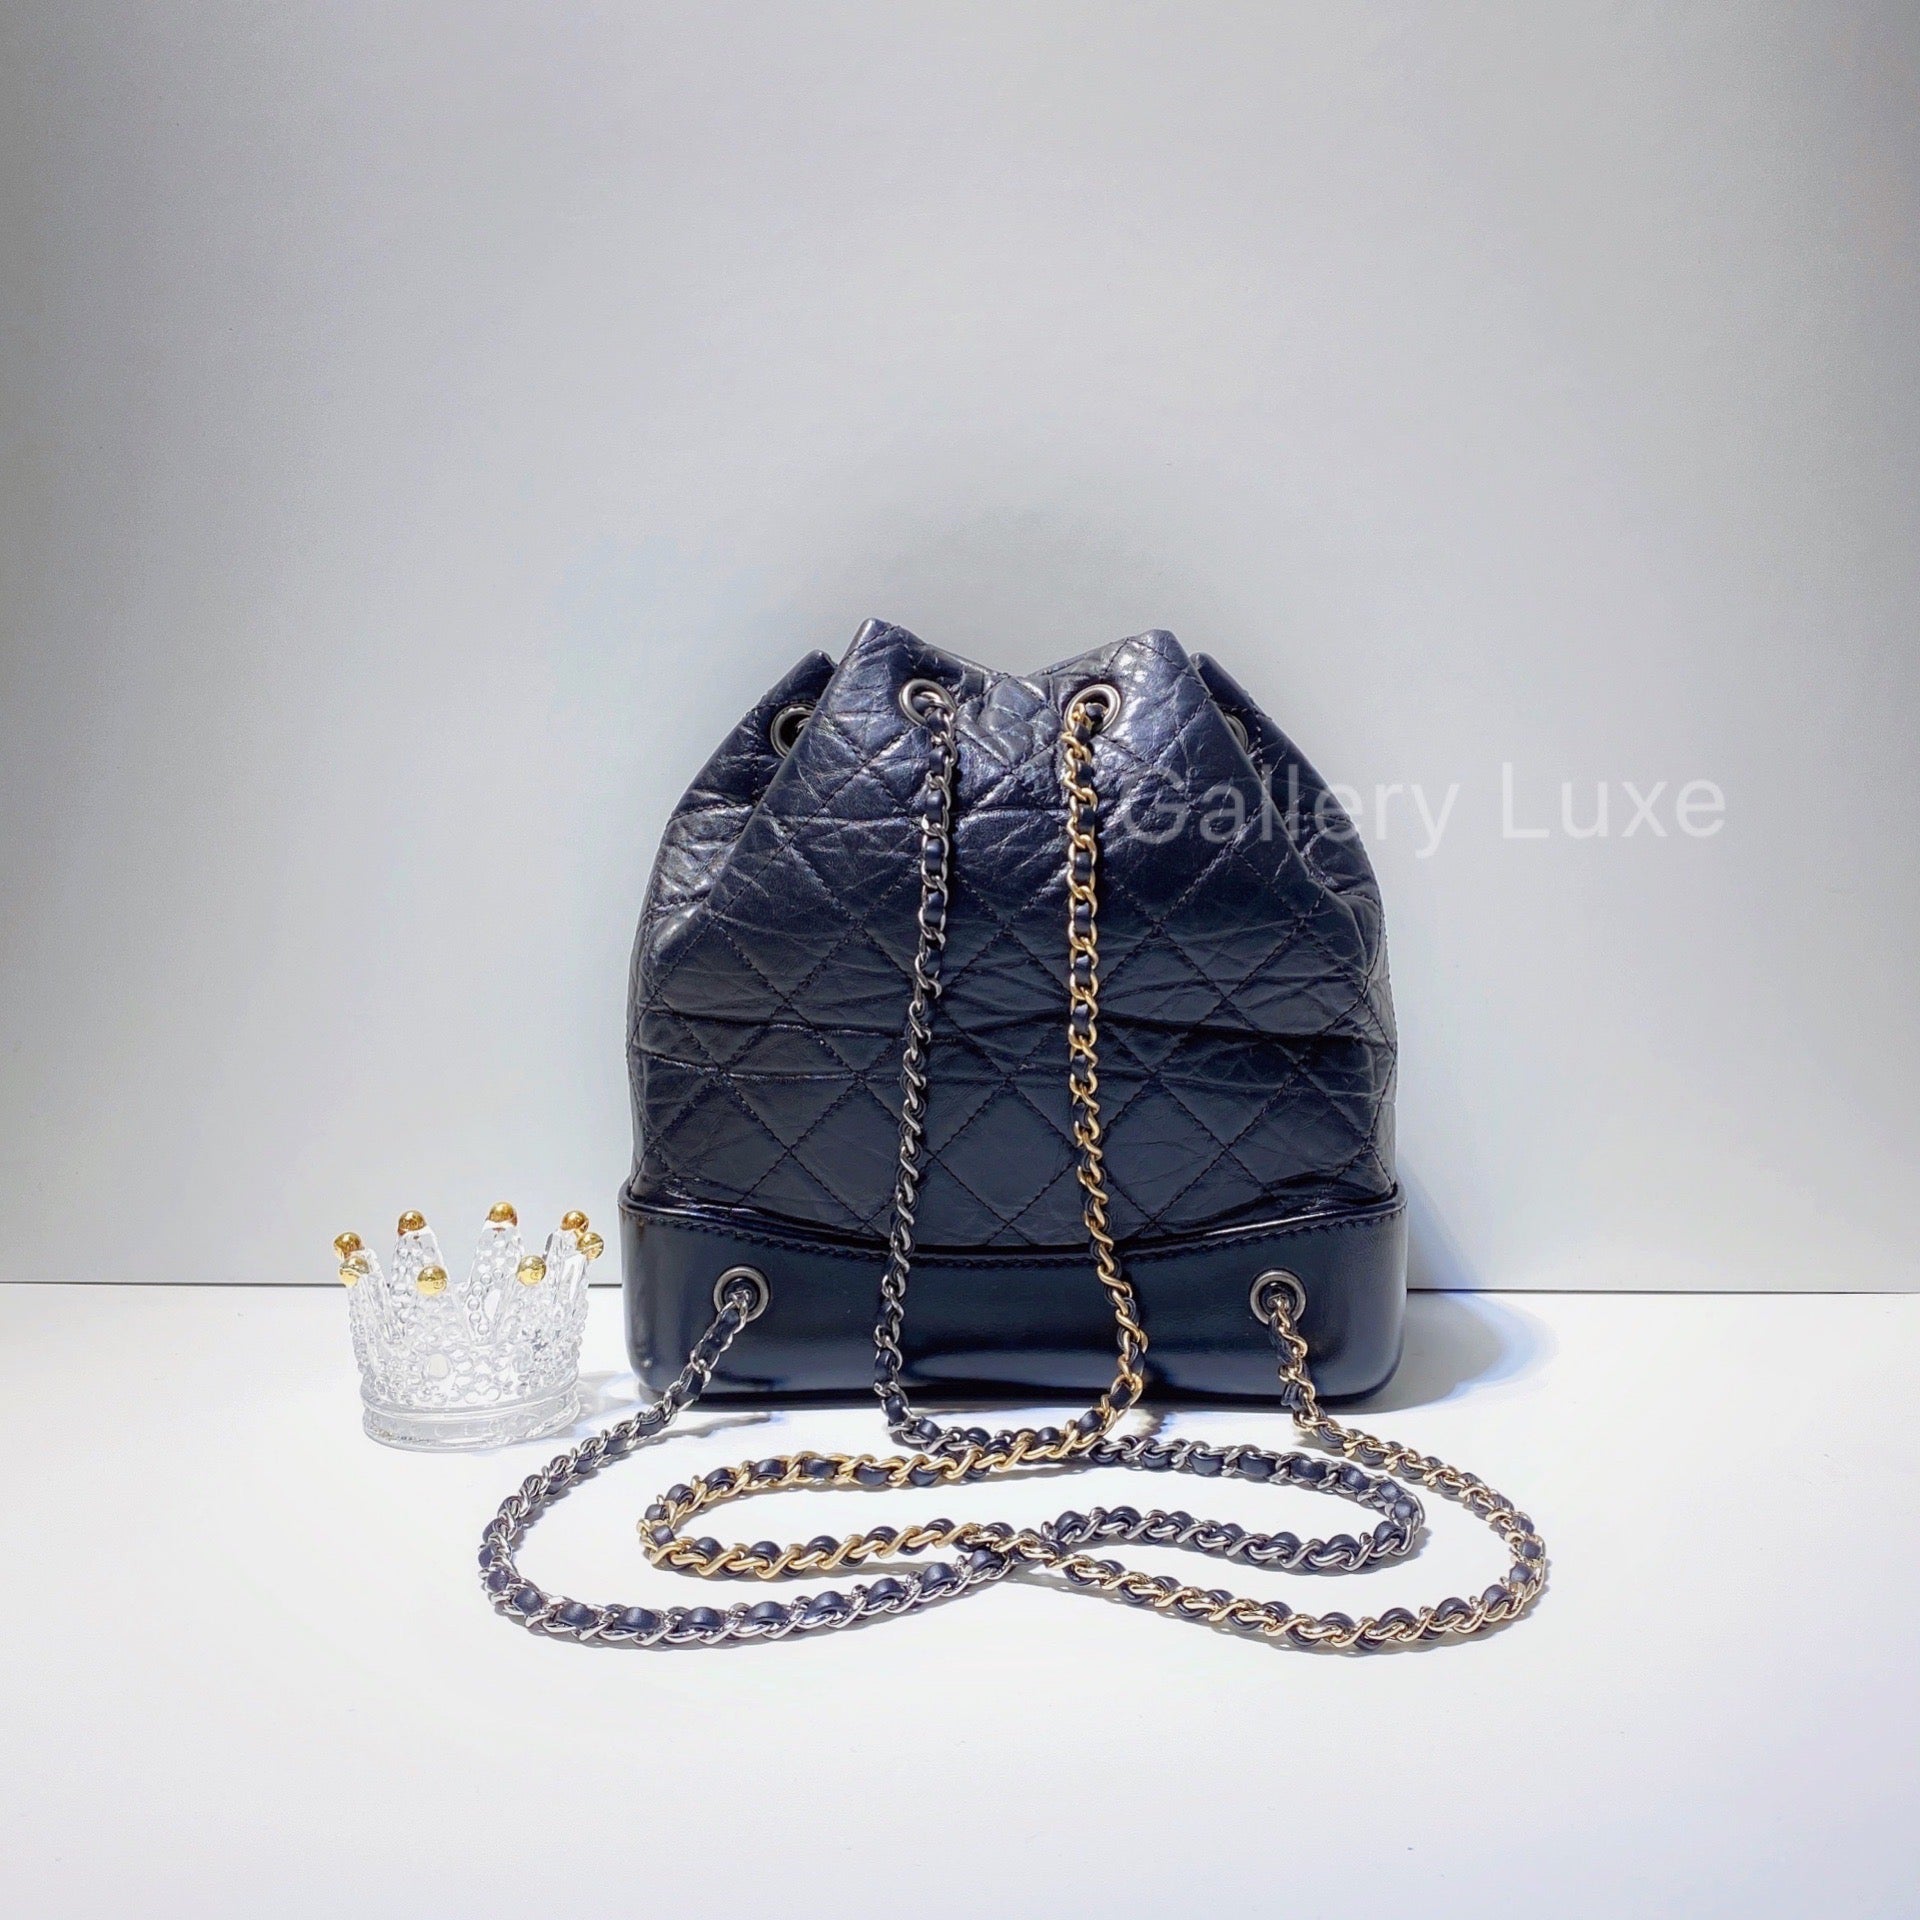 CHANEL KELLY Small Black Top Handle Handbag 23K New Full Set Mini Shopping  bag